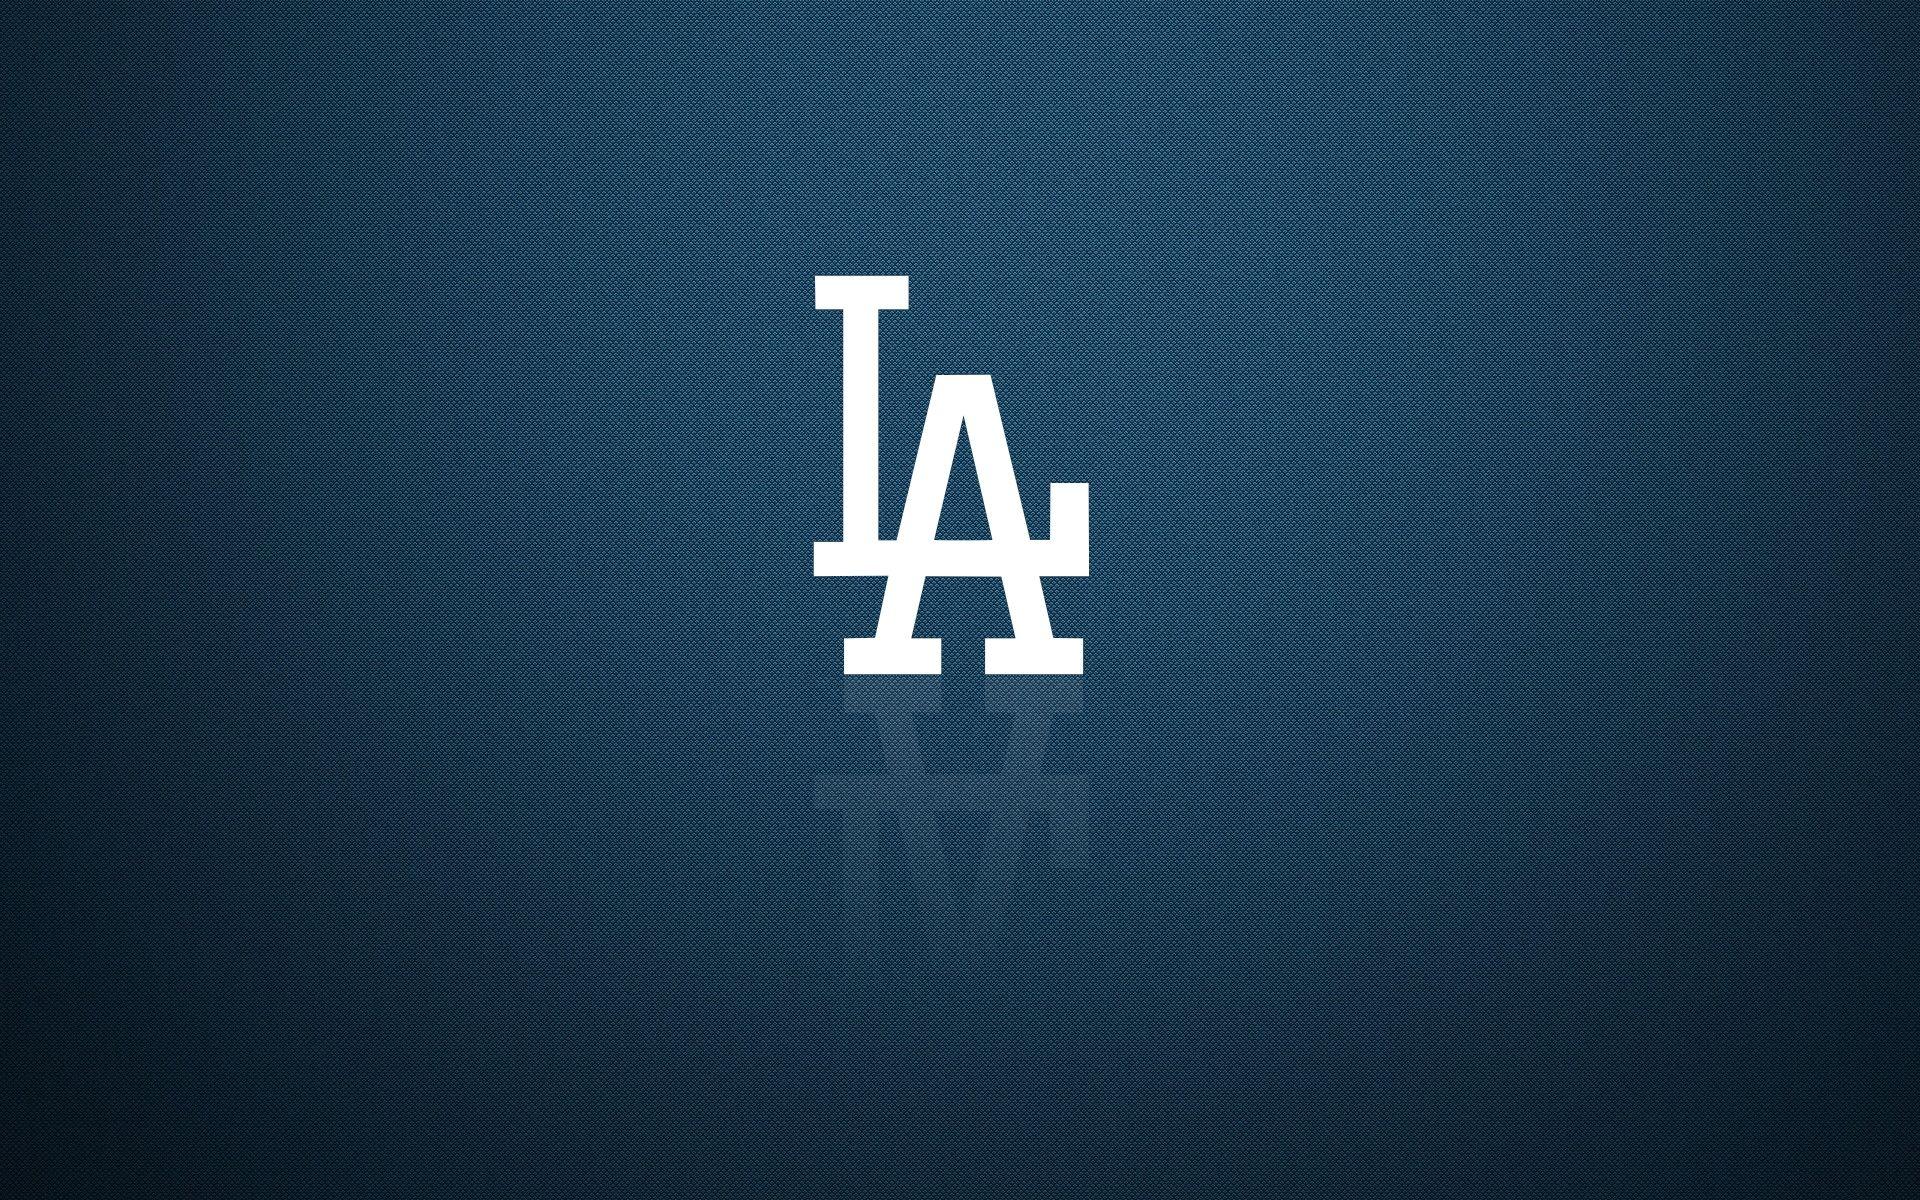 Los Angeles Dodgers wallpaper with white LA logo 1920×1200 px